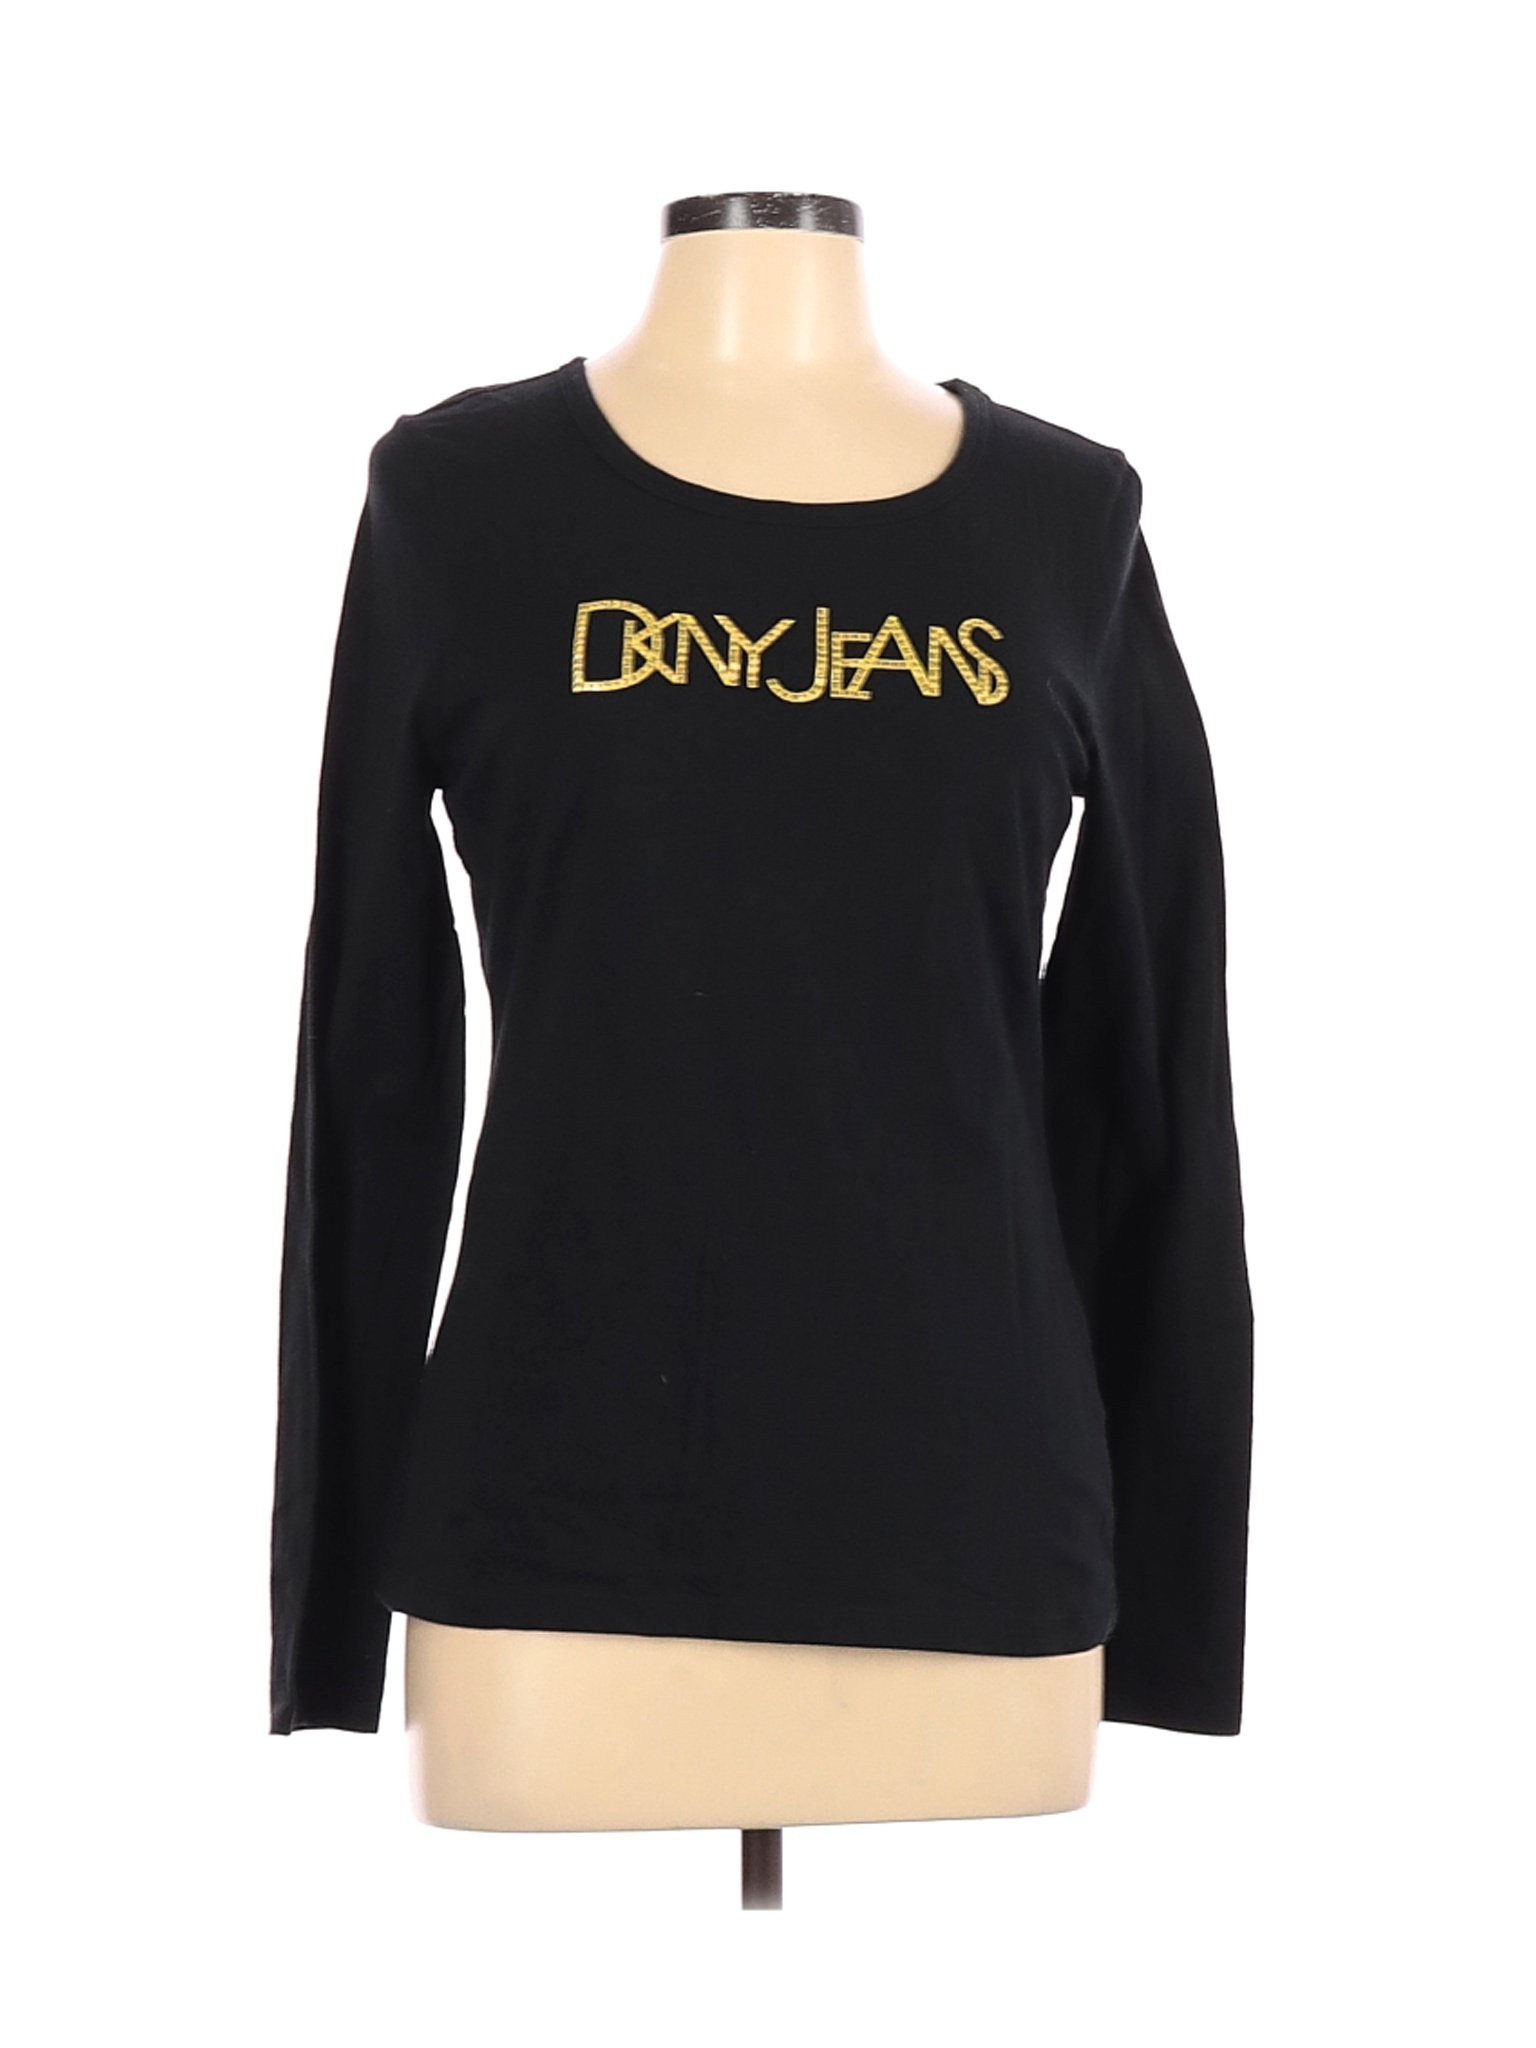 DKNY Jeans Women Black Long Sleeve T-Shirt L | eBay